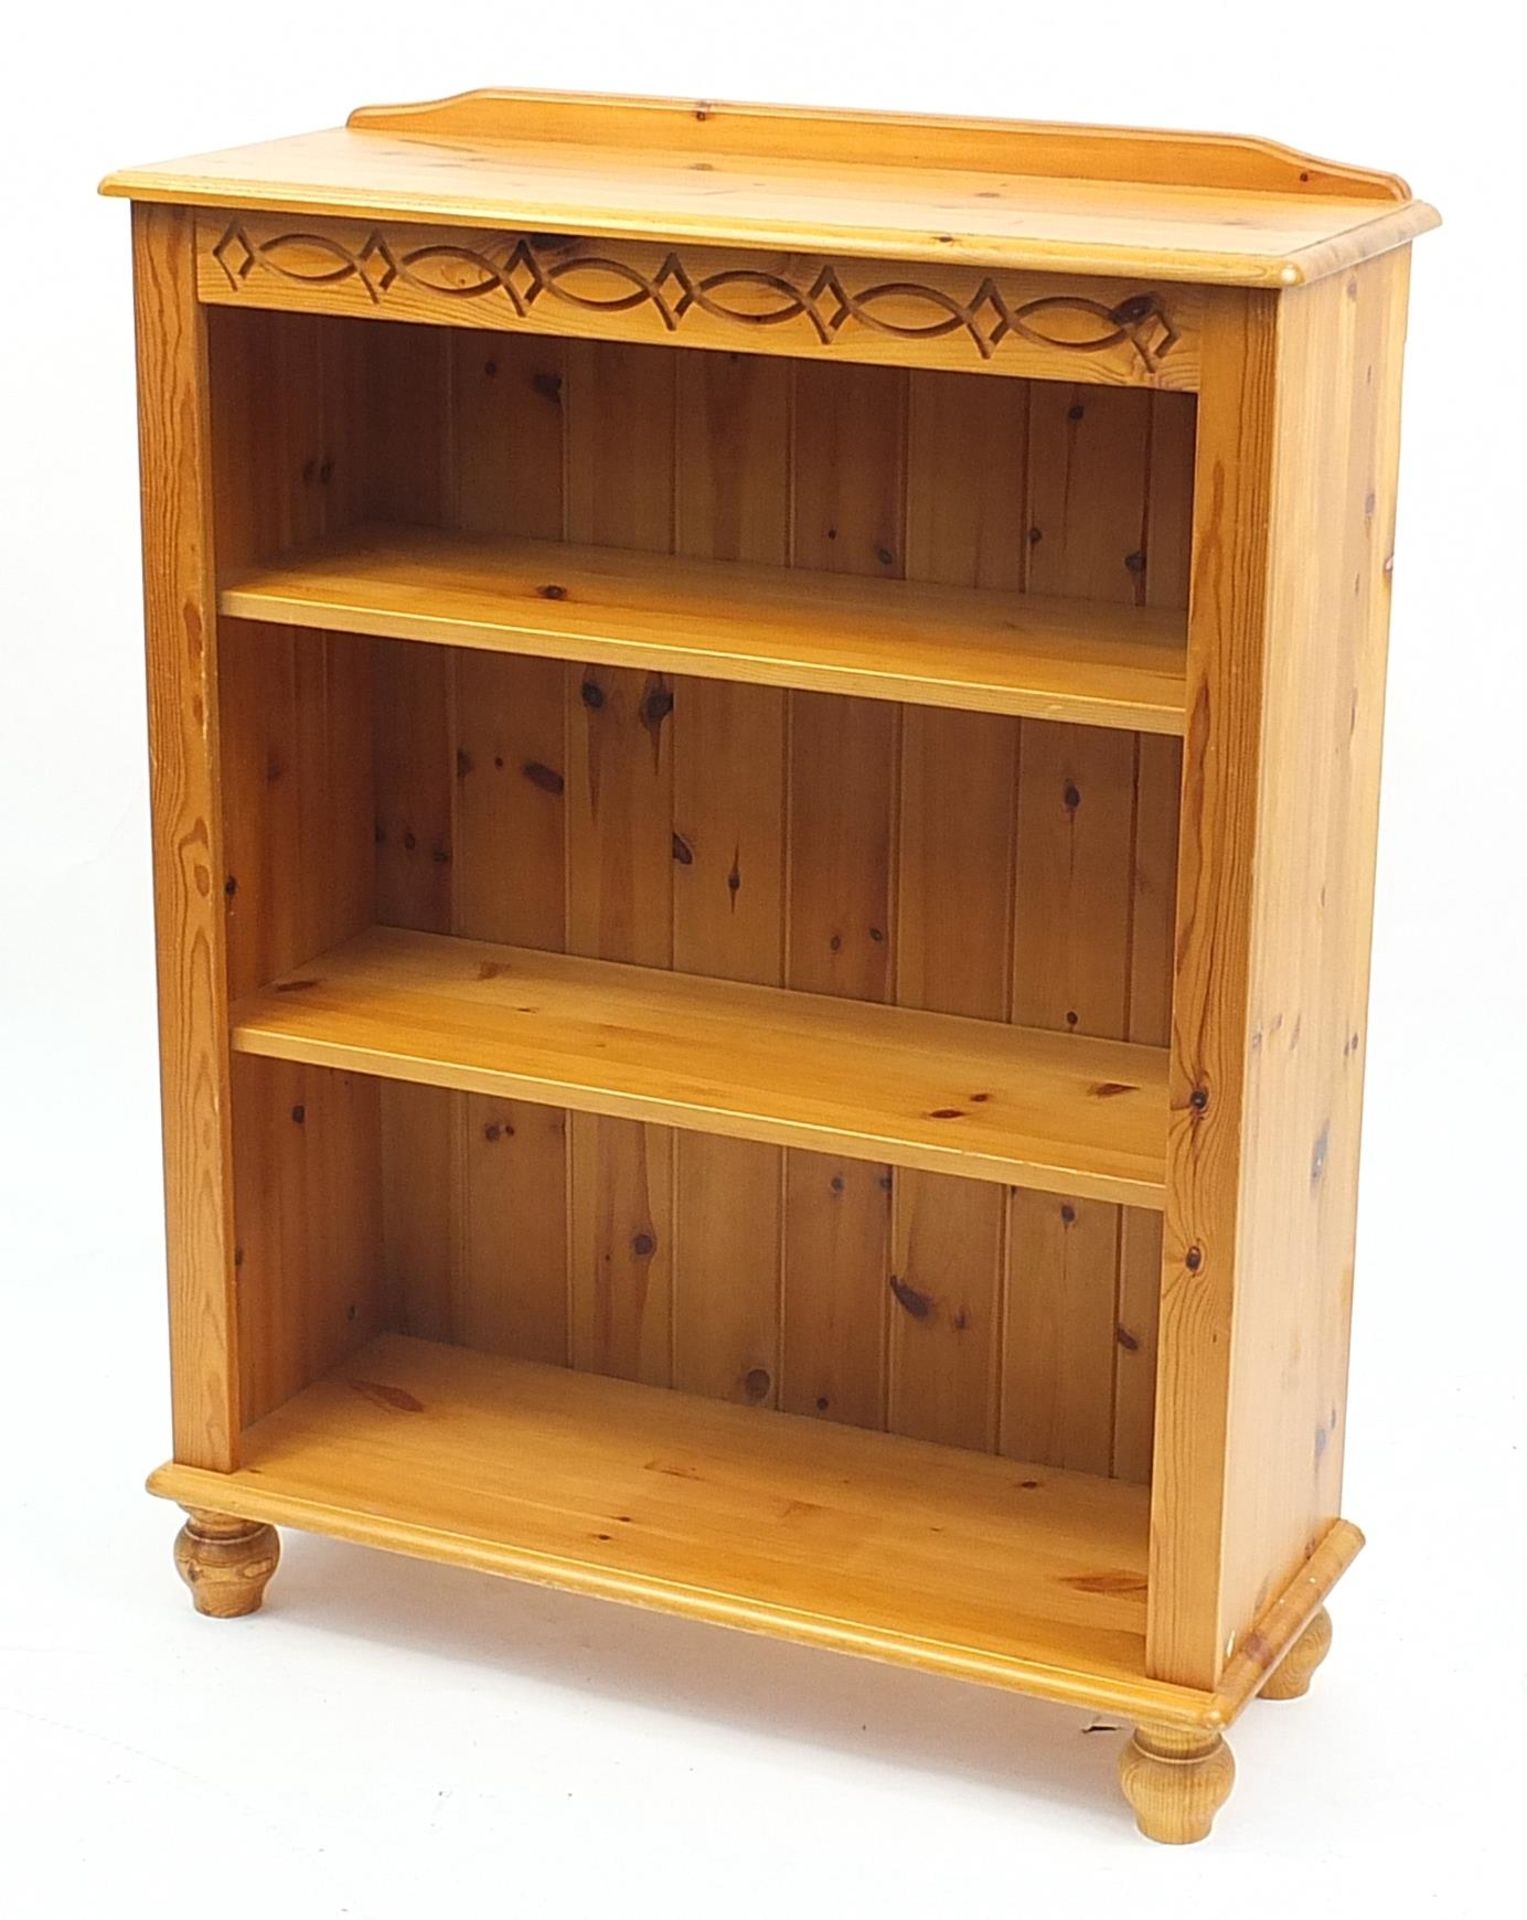 Pine three shelf open bookcase, 111cm H x 85cm W x 32cm D